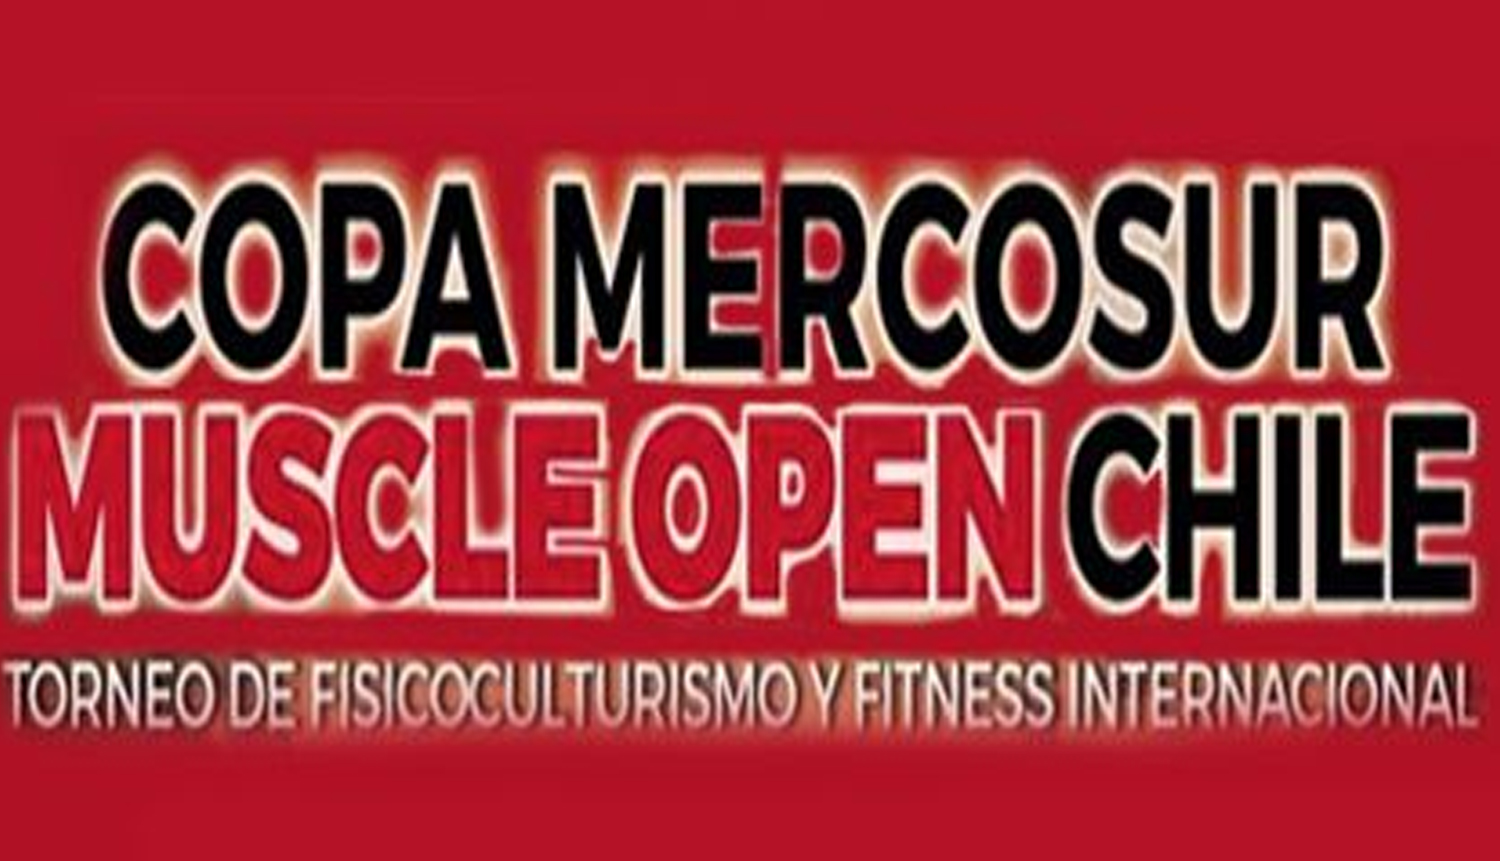 COPA MERCOSUR MUSCLE OPEN CHILE 2015